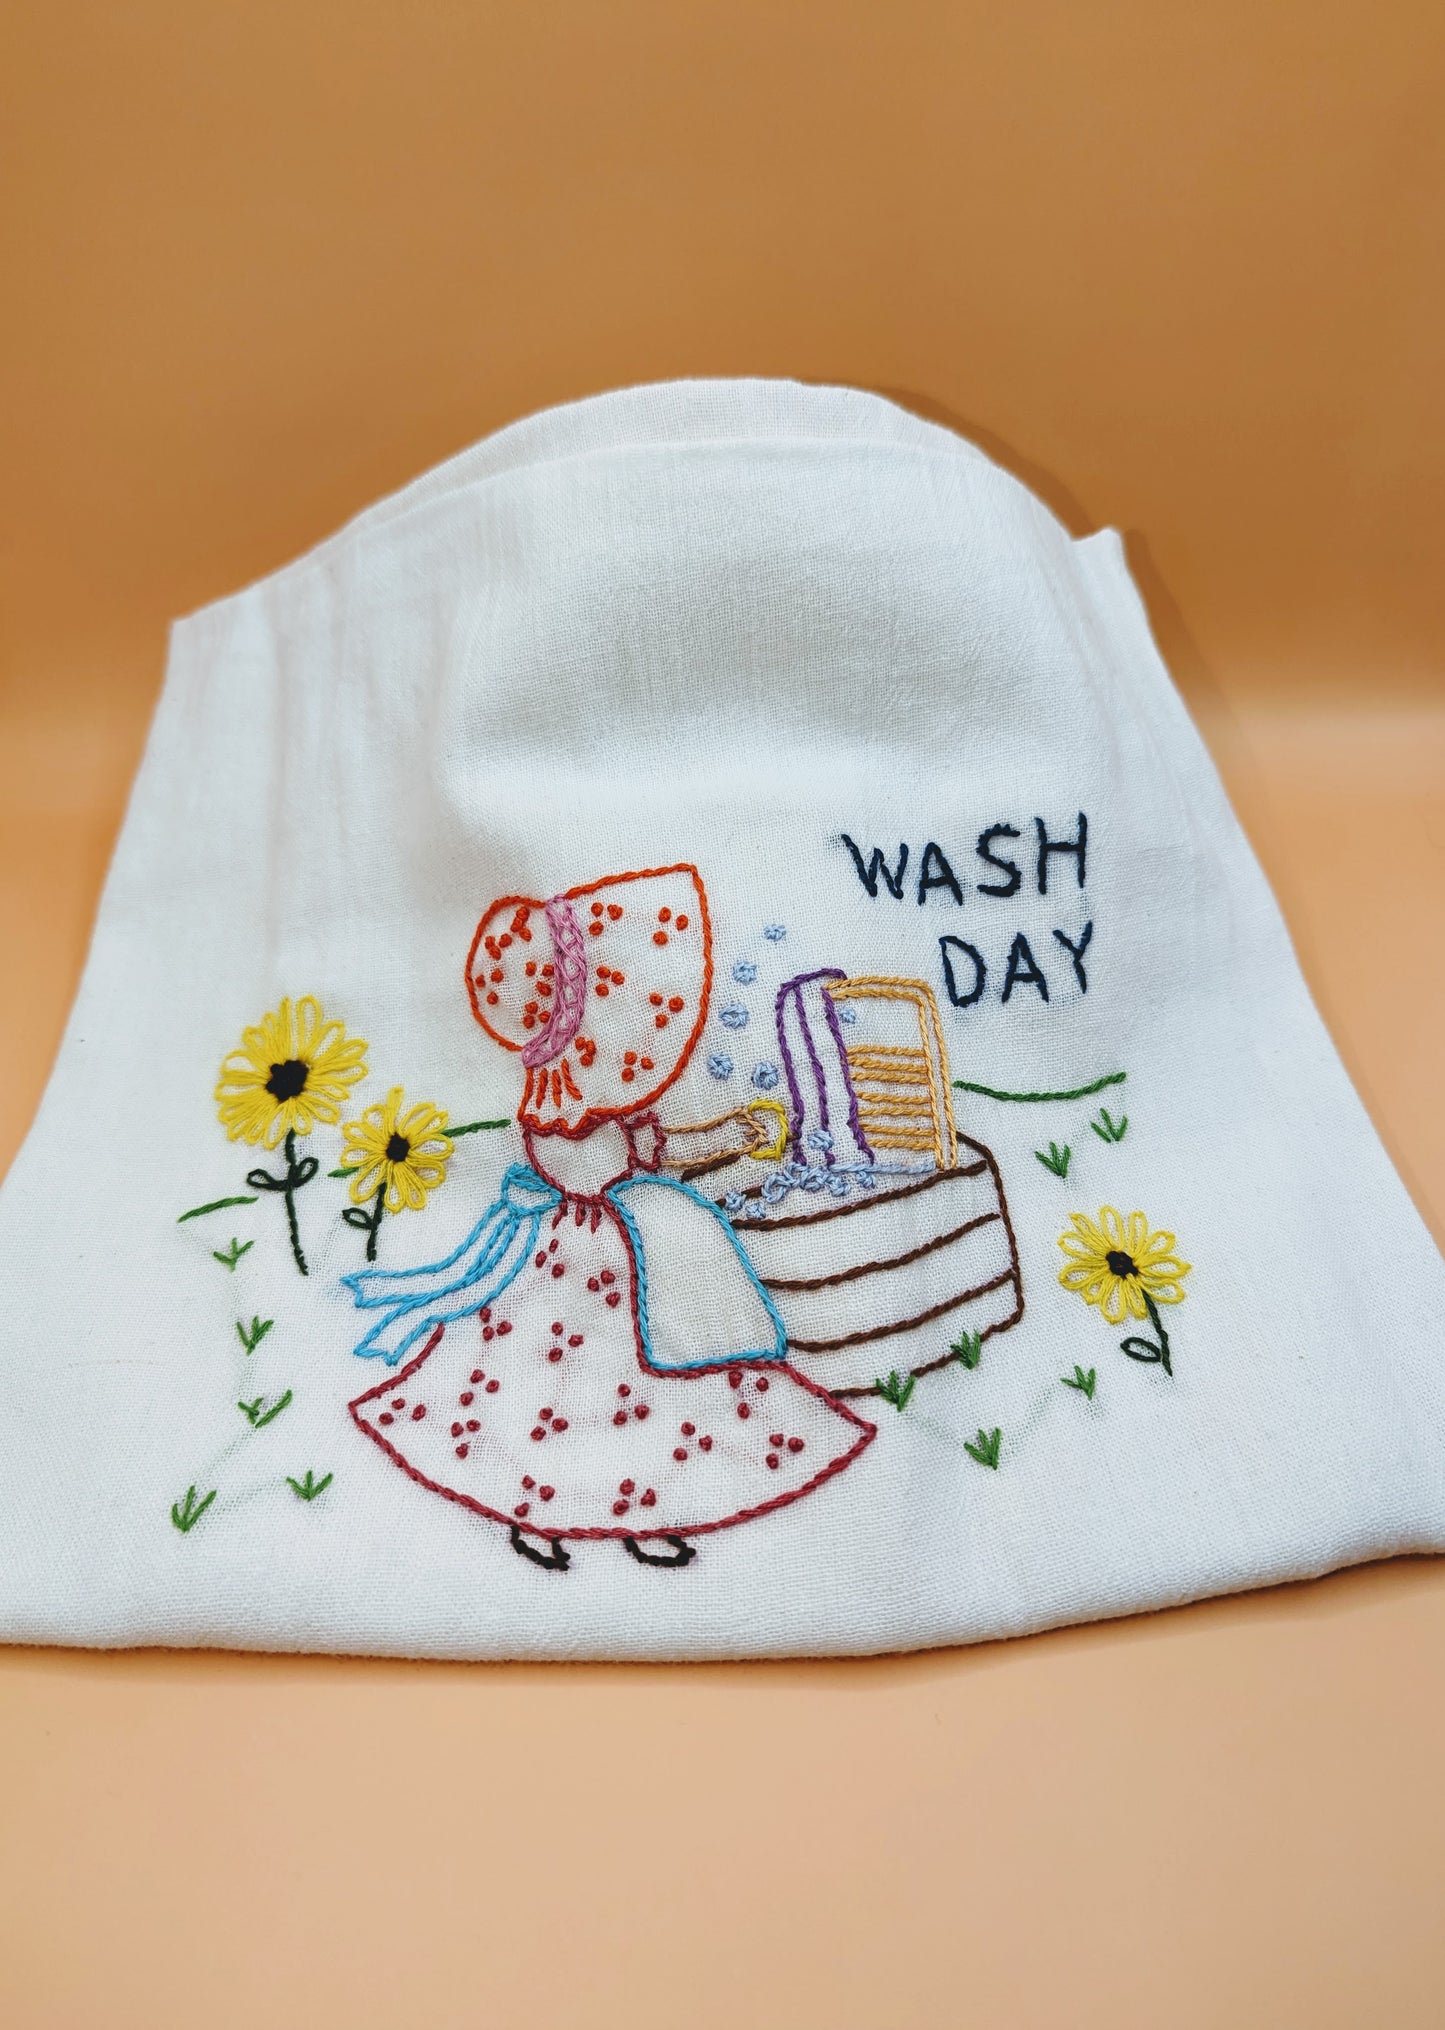 Wash Day - Kitchen Towel